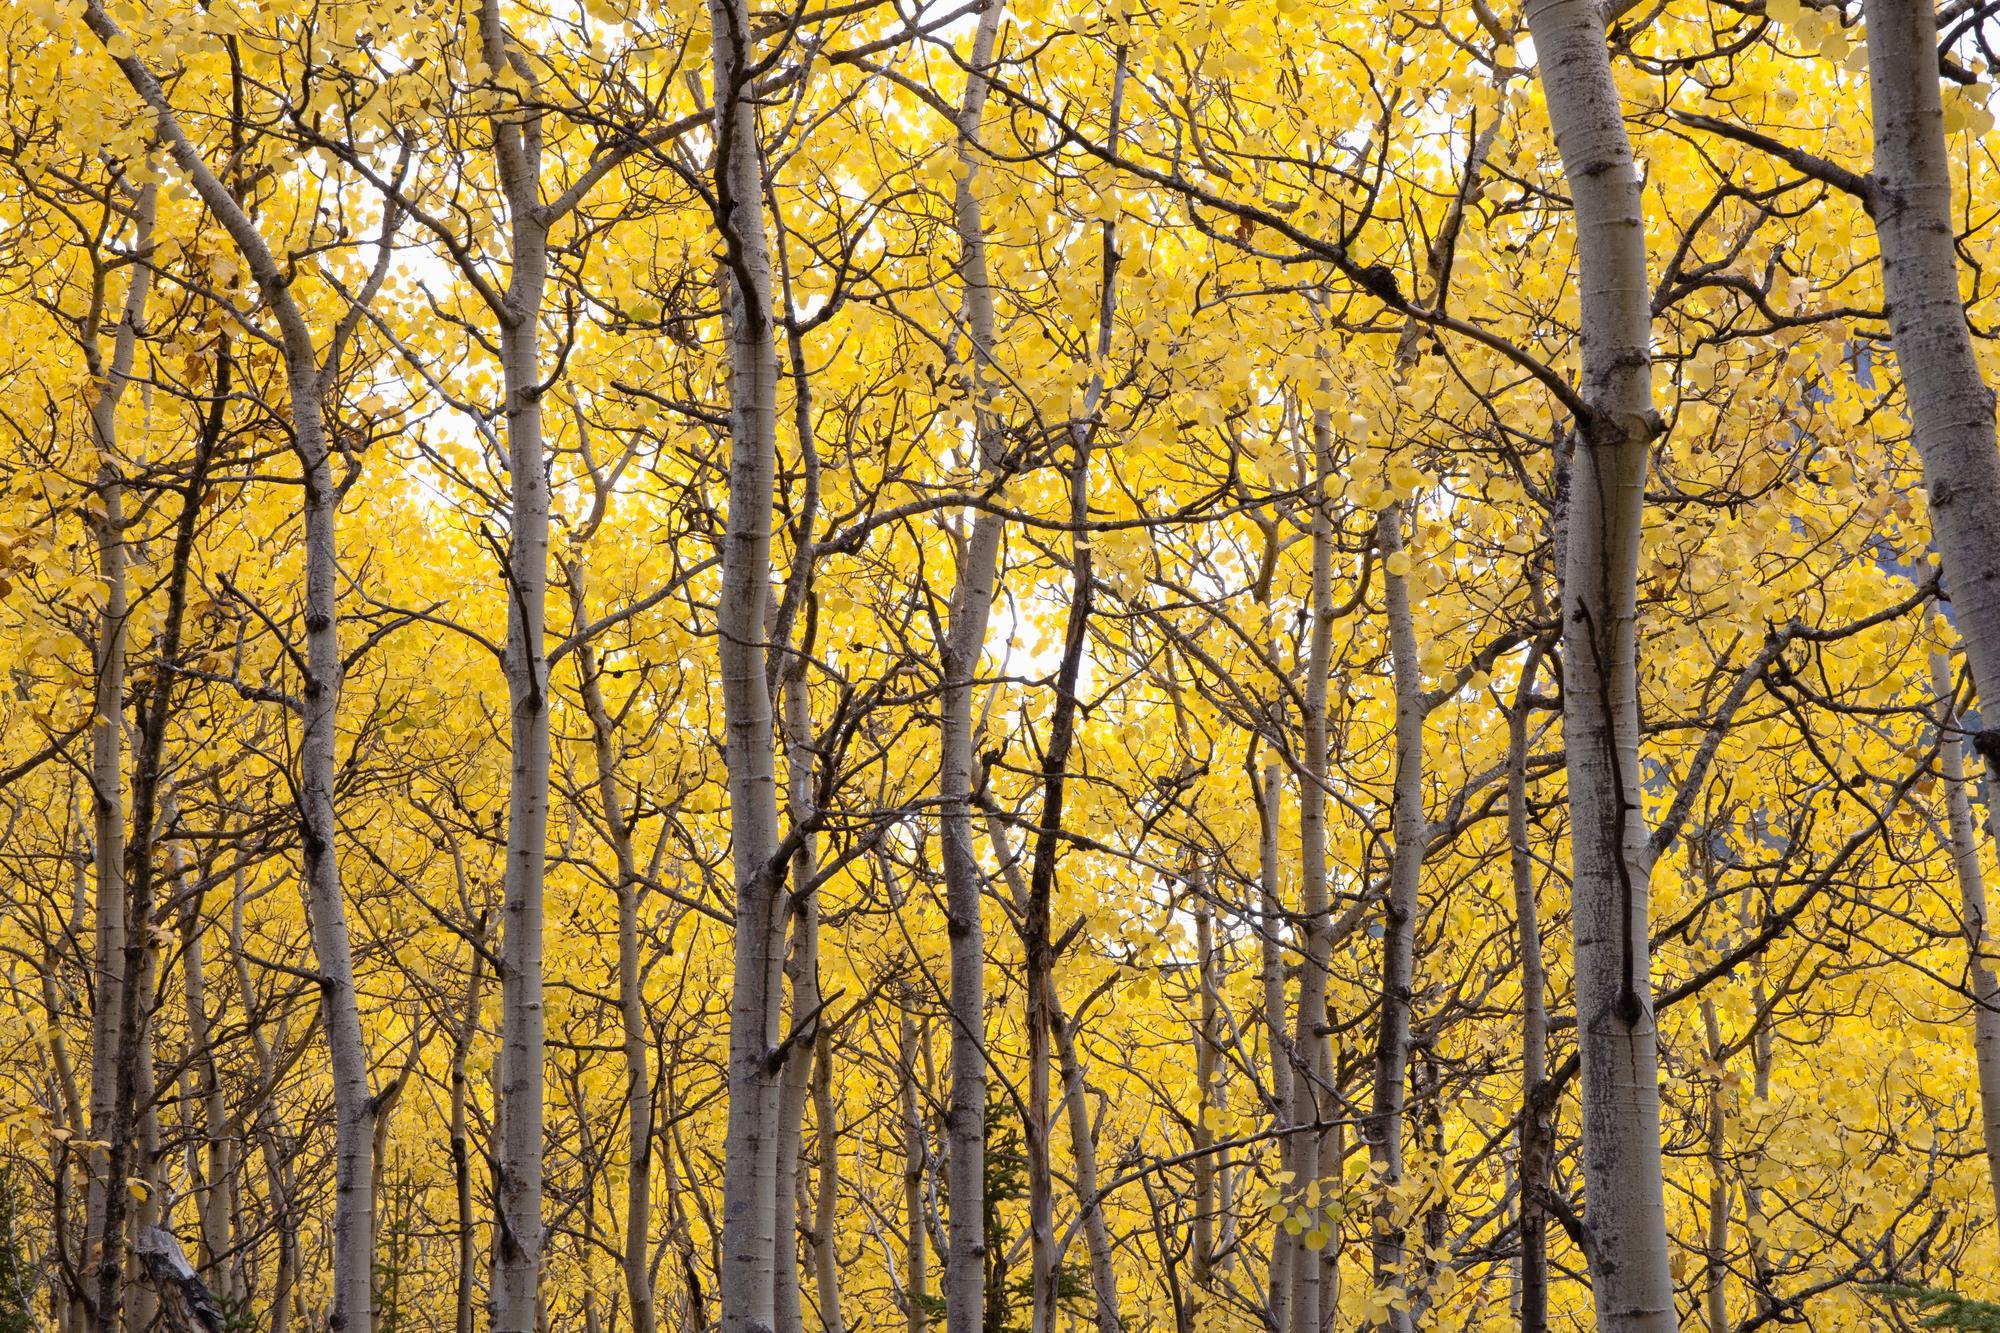 Autumn Scenic Of Colorful Yellow Aspen Trees